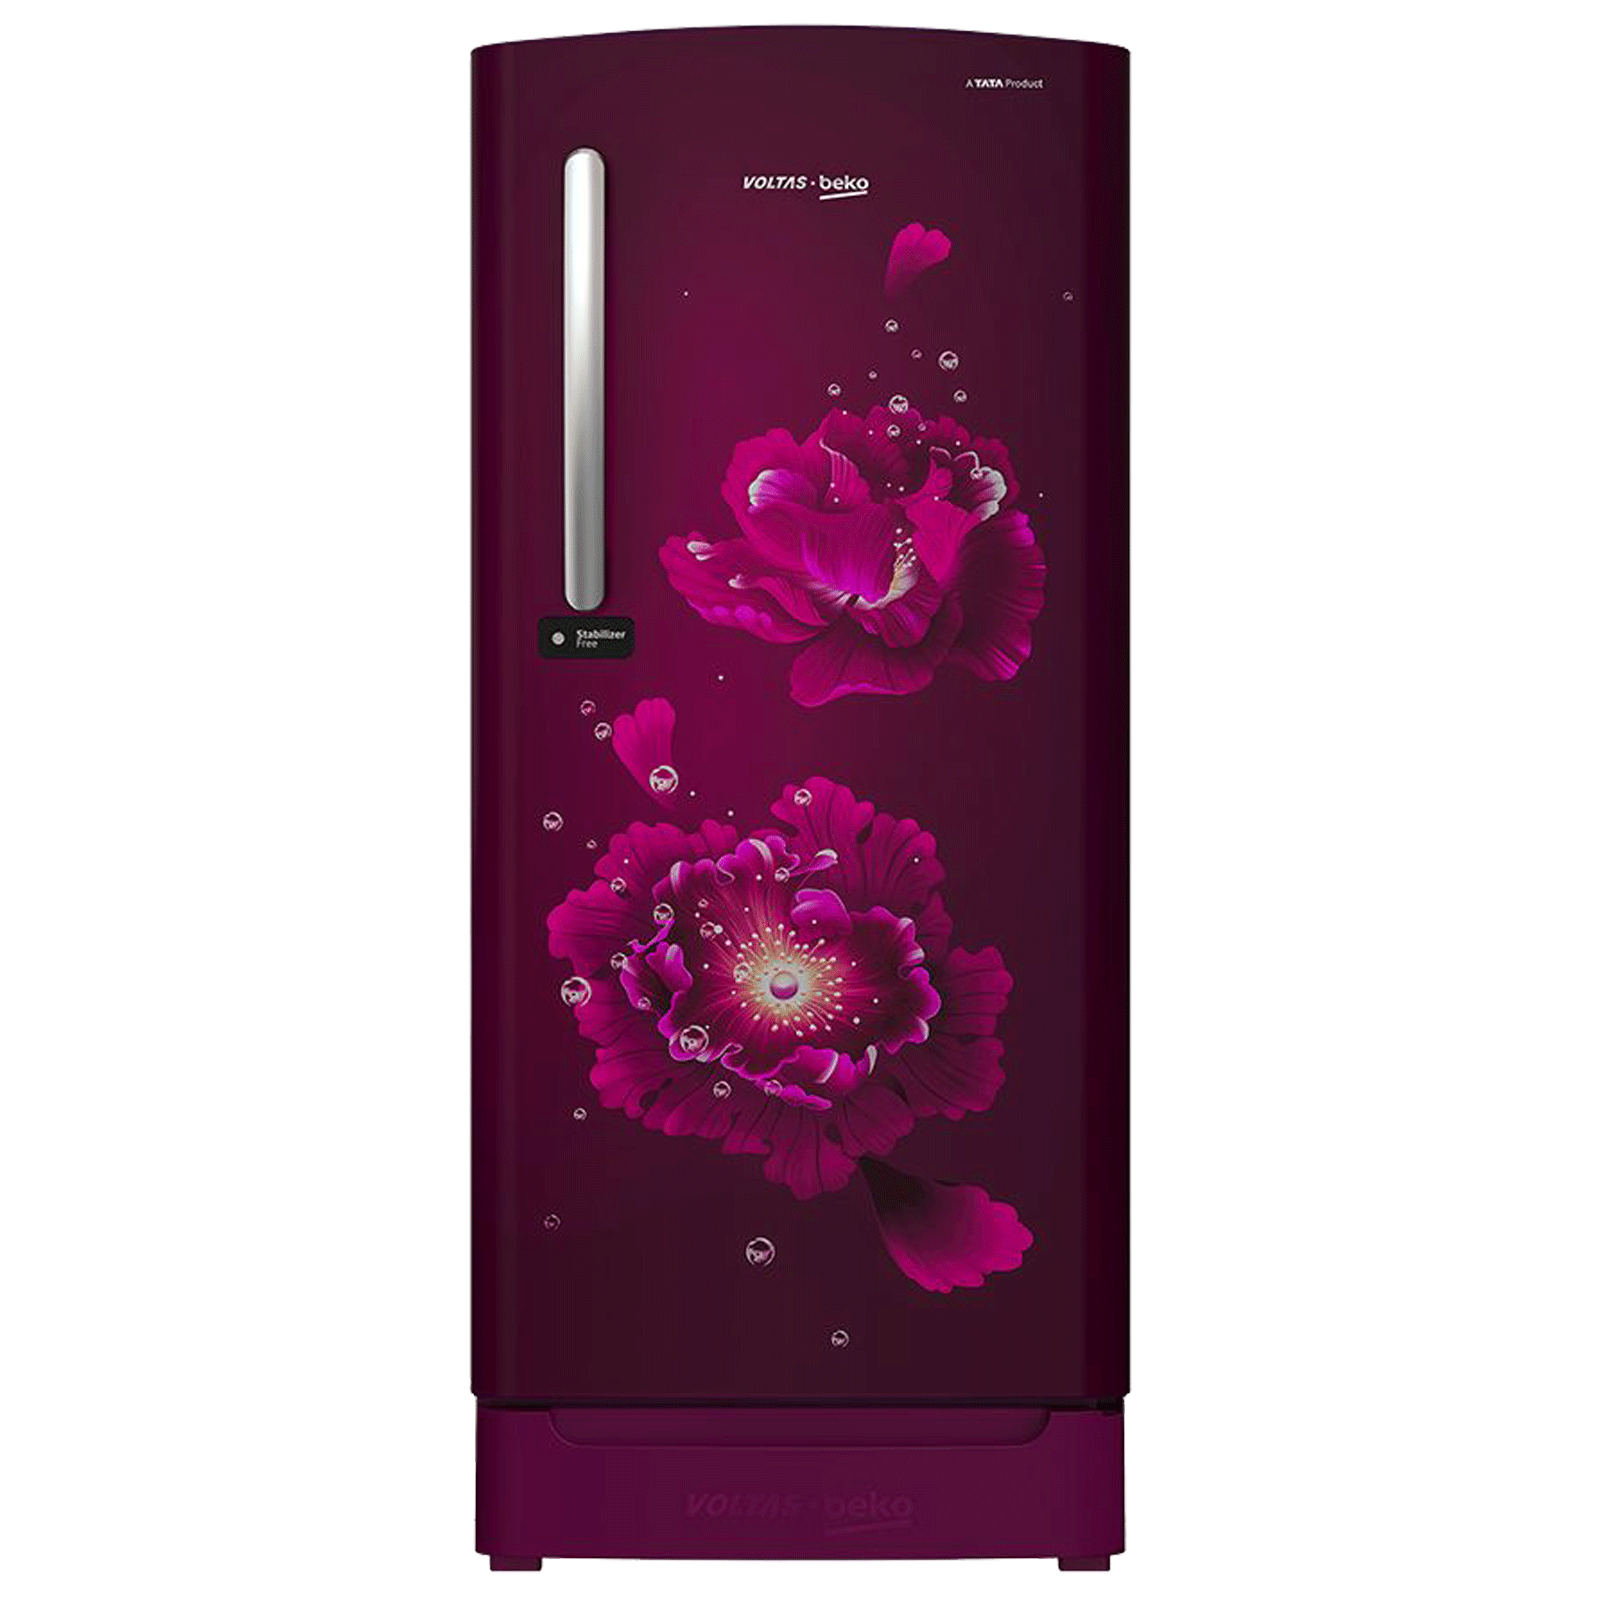 Voltas Beko 195 Litres 4 Star Single Door Direct Cool(RDC215BFPEXB/BASG, Fairy Flower Purple)_1